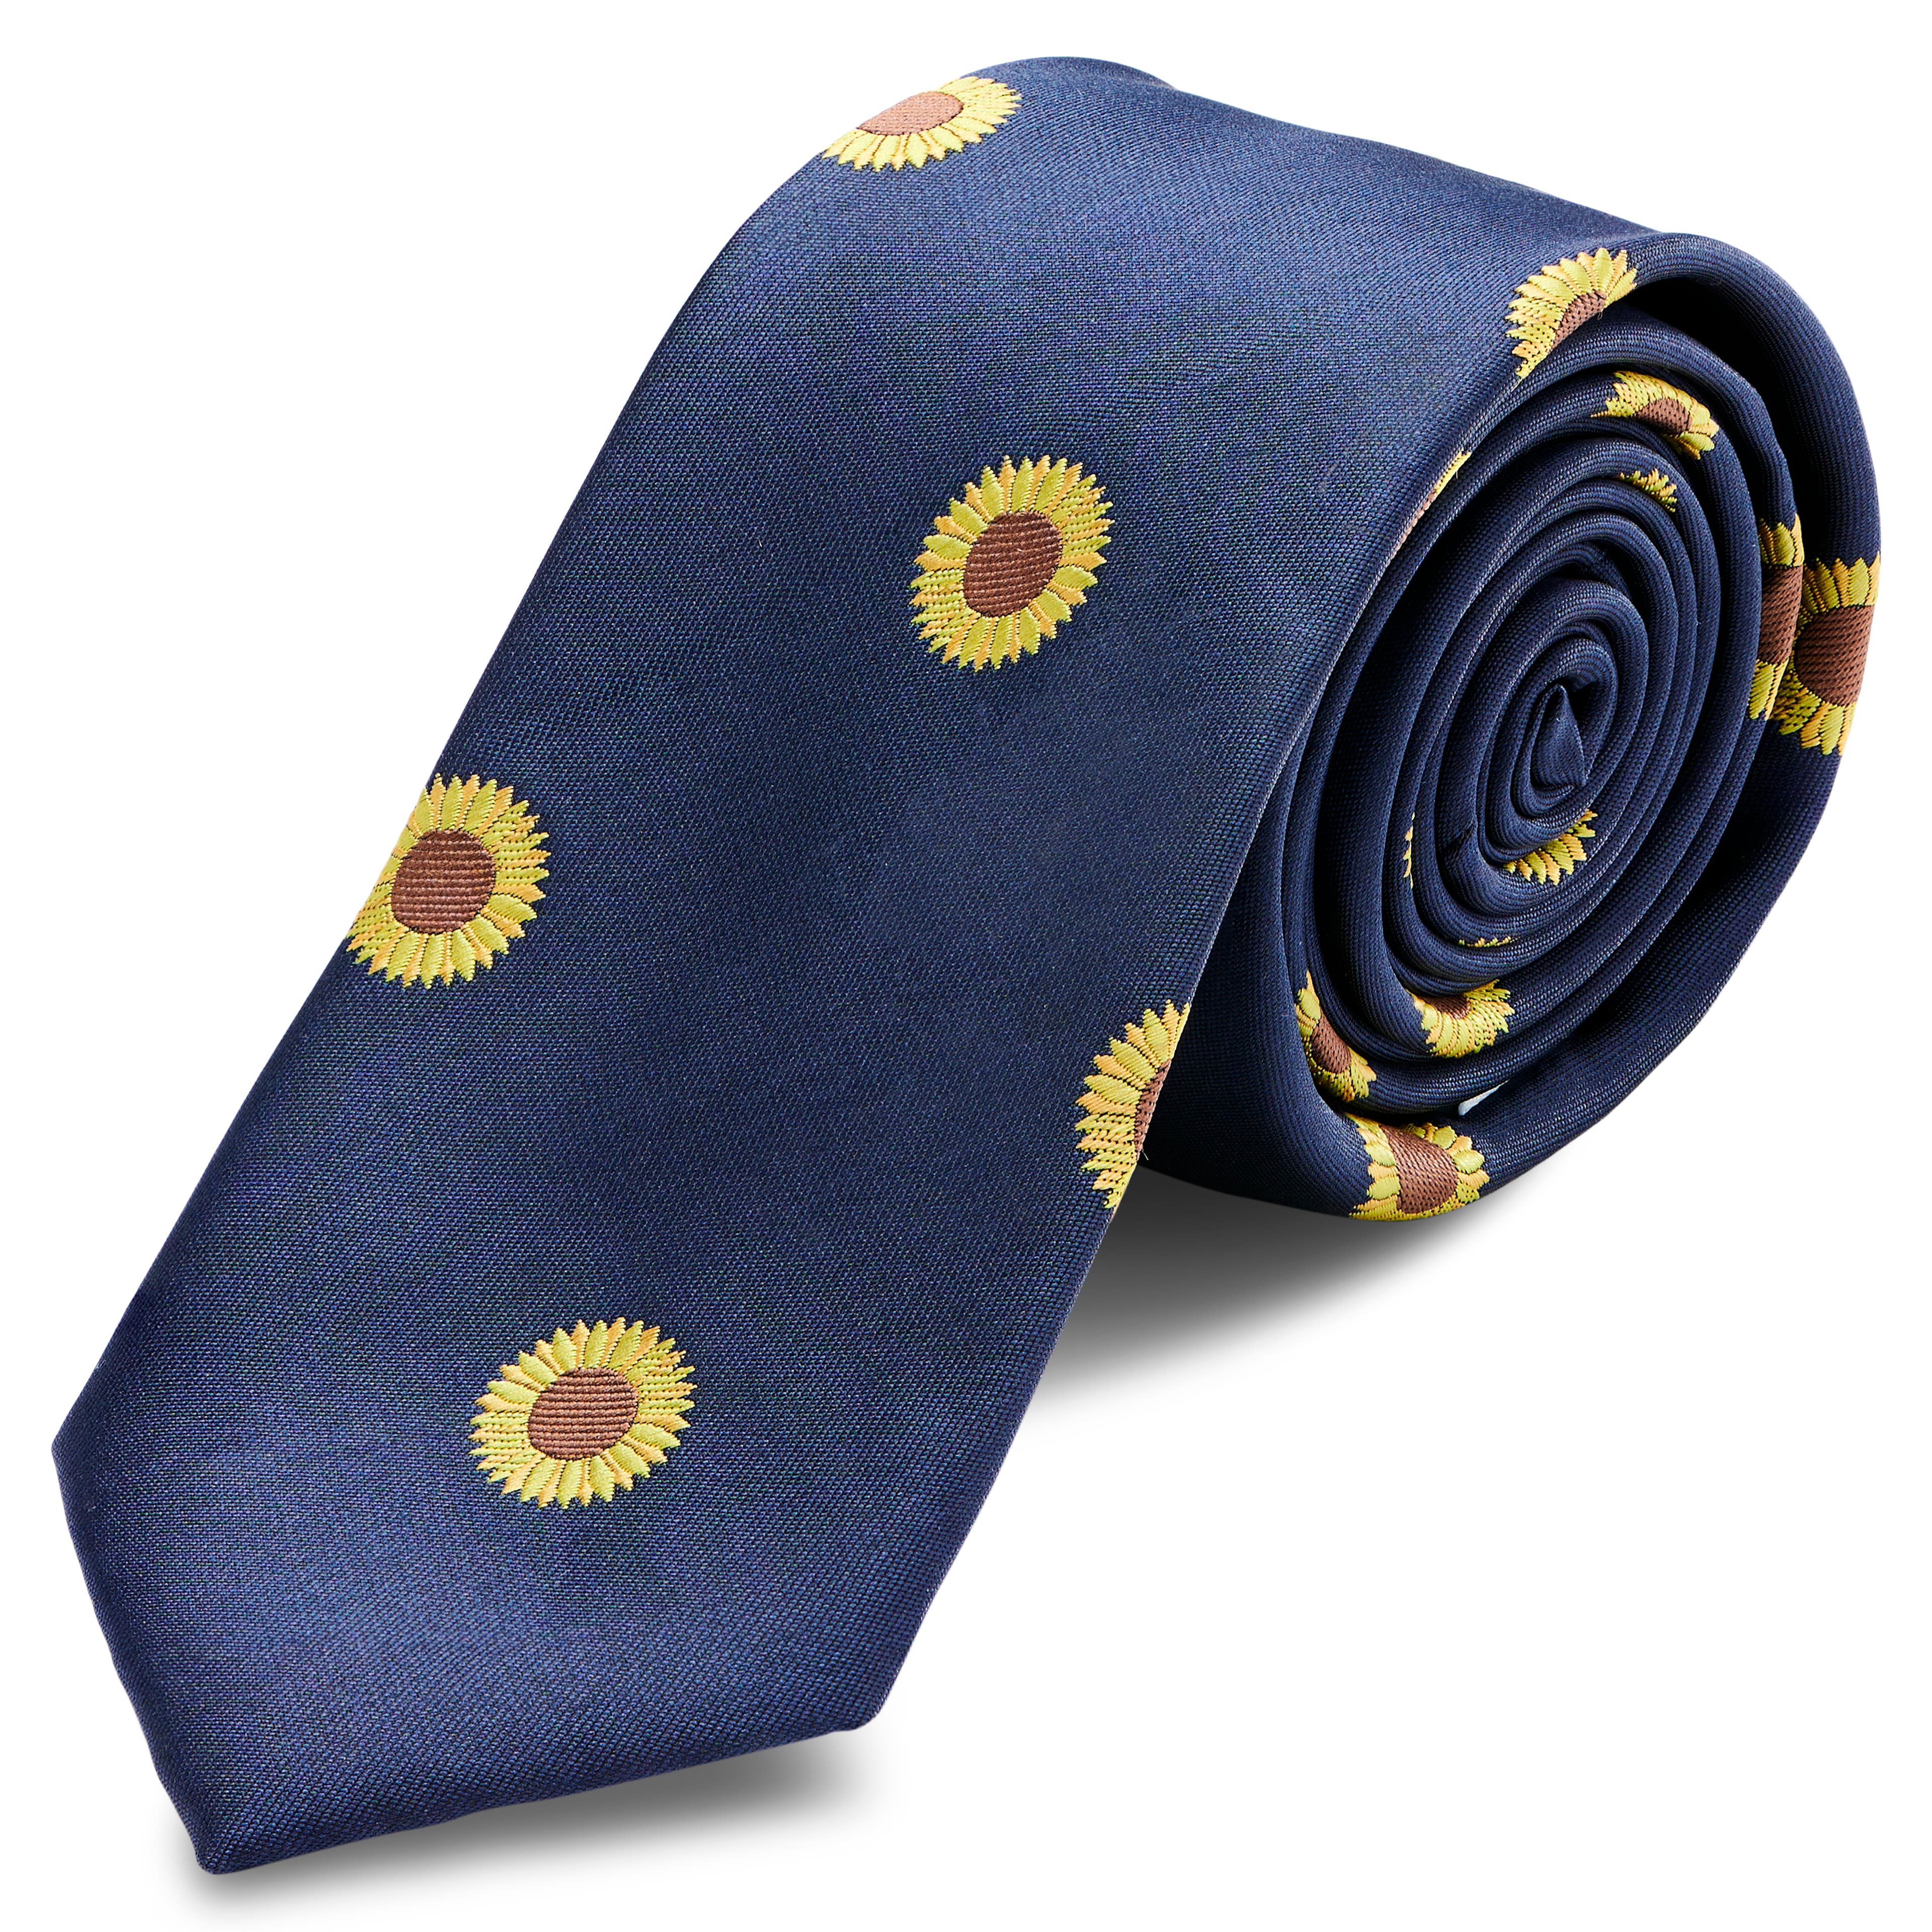 Cravate étroite bleu marine à motifs de tournesols